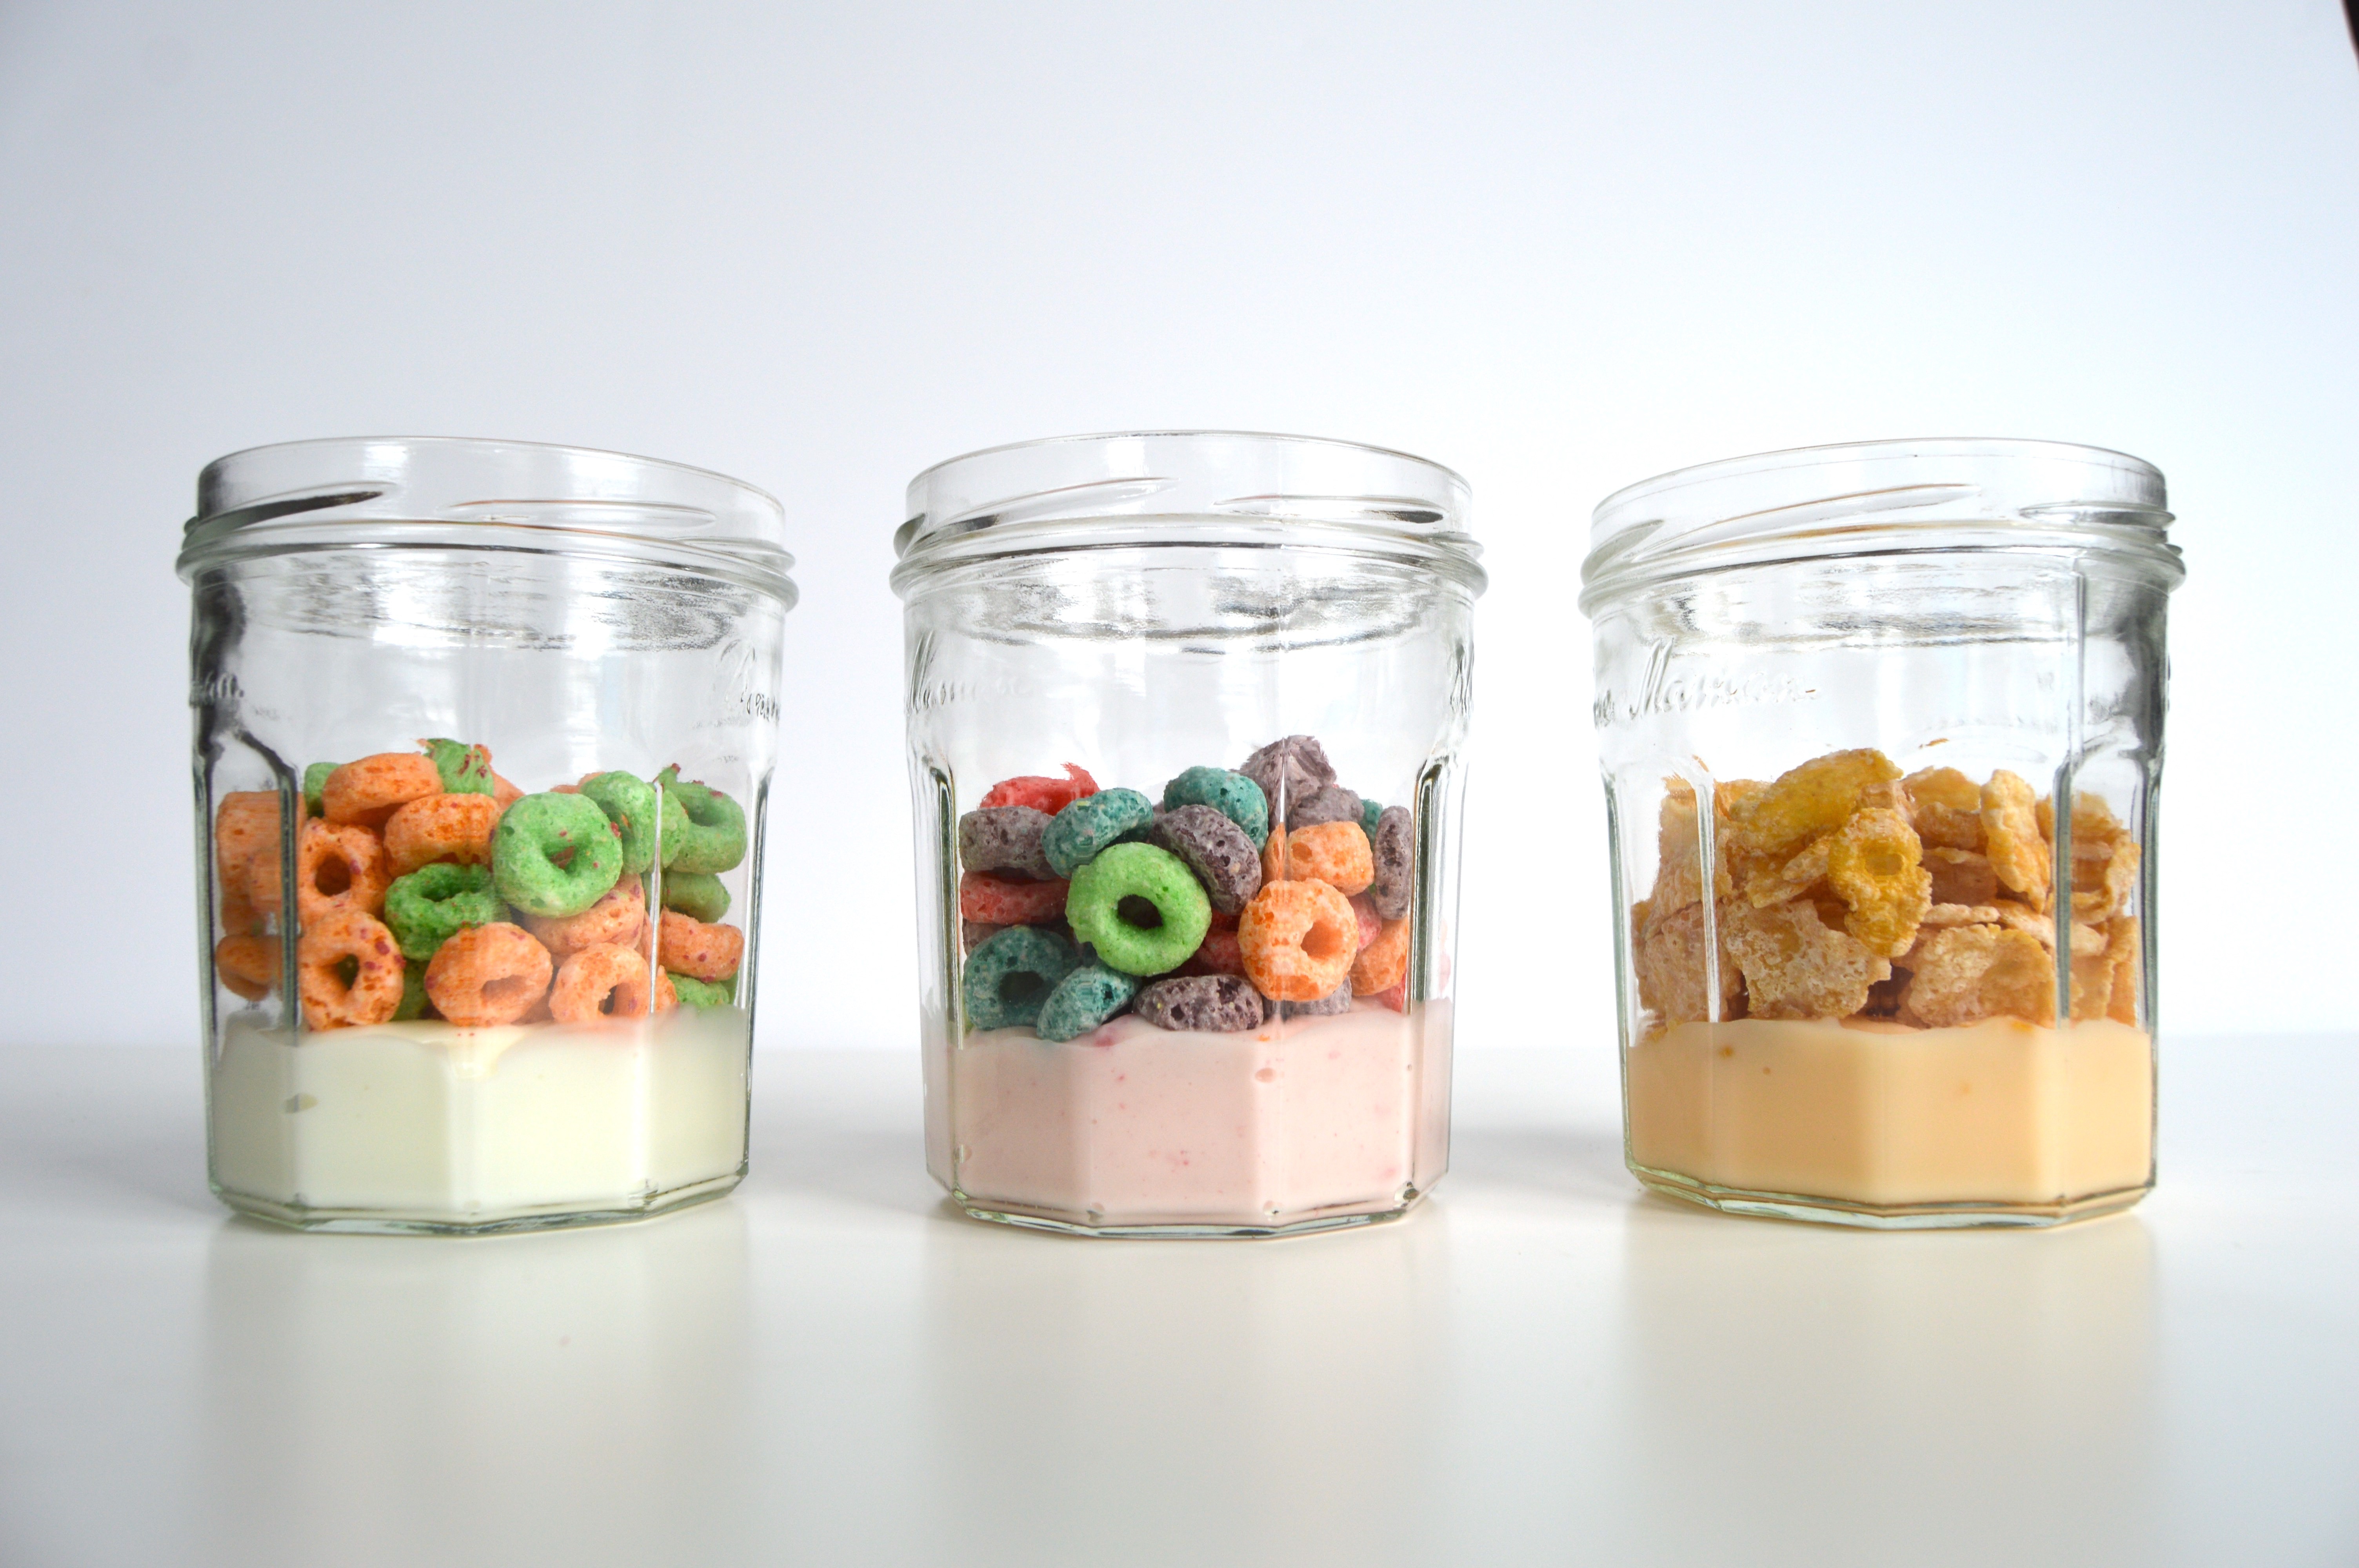 Layer 2: Cereal | Cereal yogurt parfait